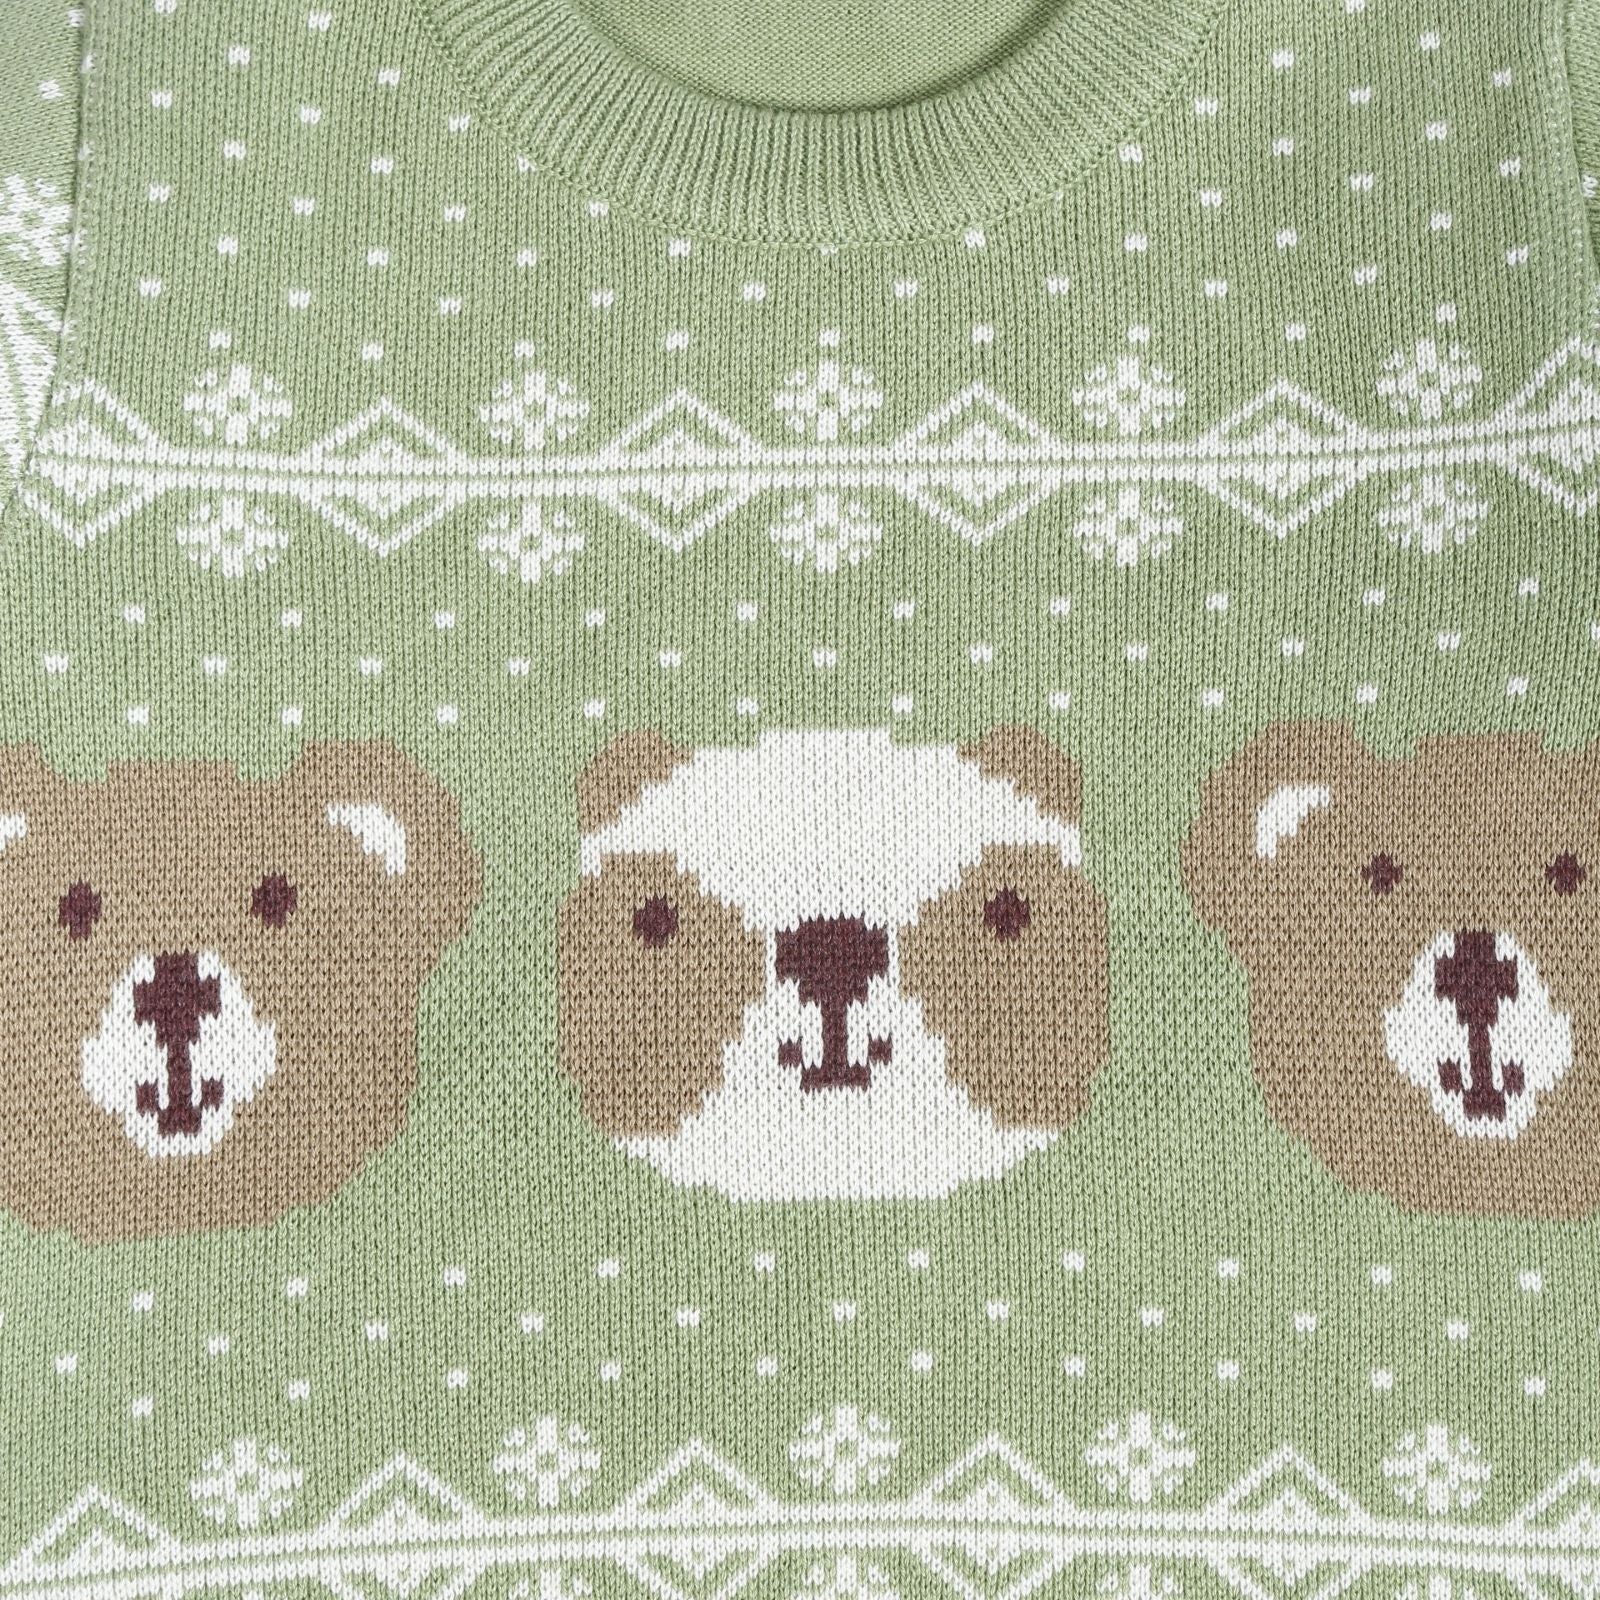 Greendeer Enchanting Bear Jacquard 100% Cotton Sweater Set of 2